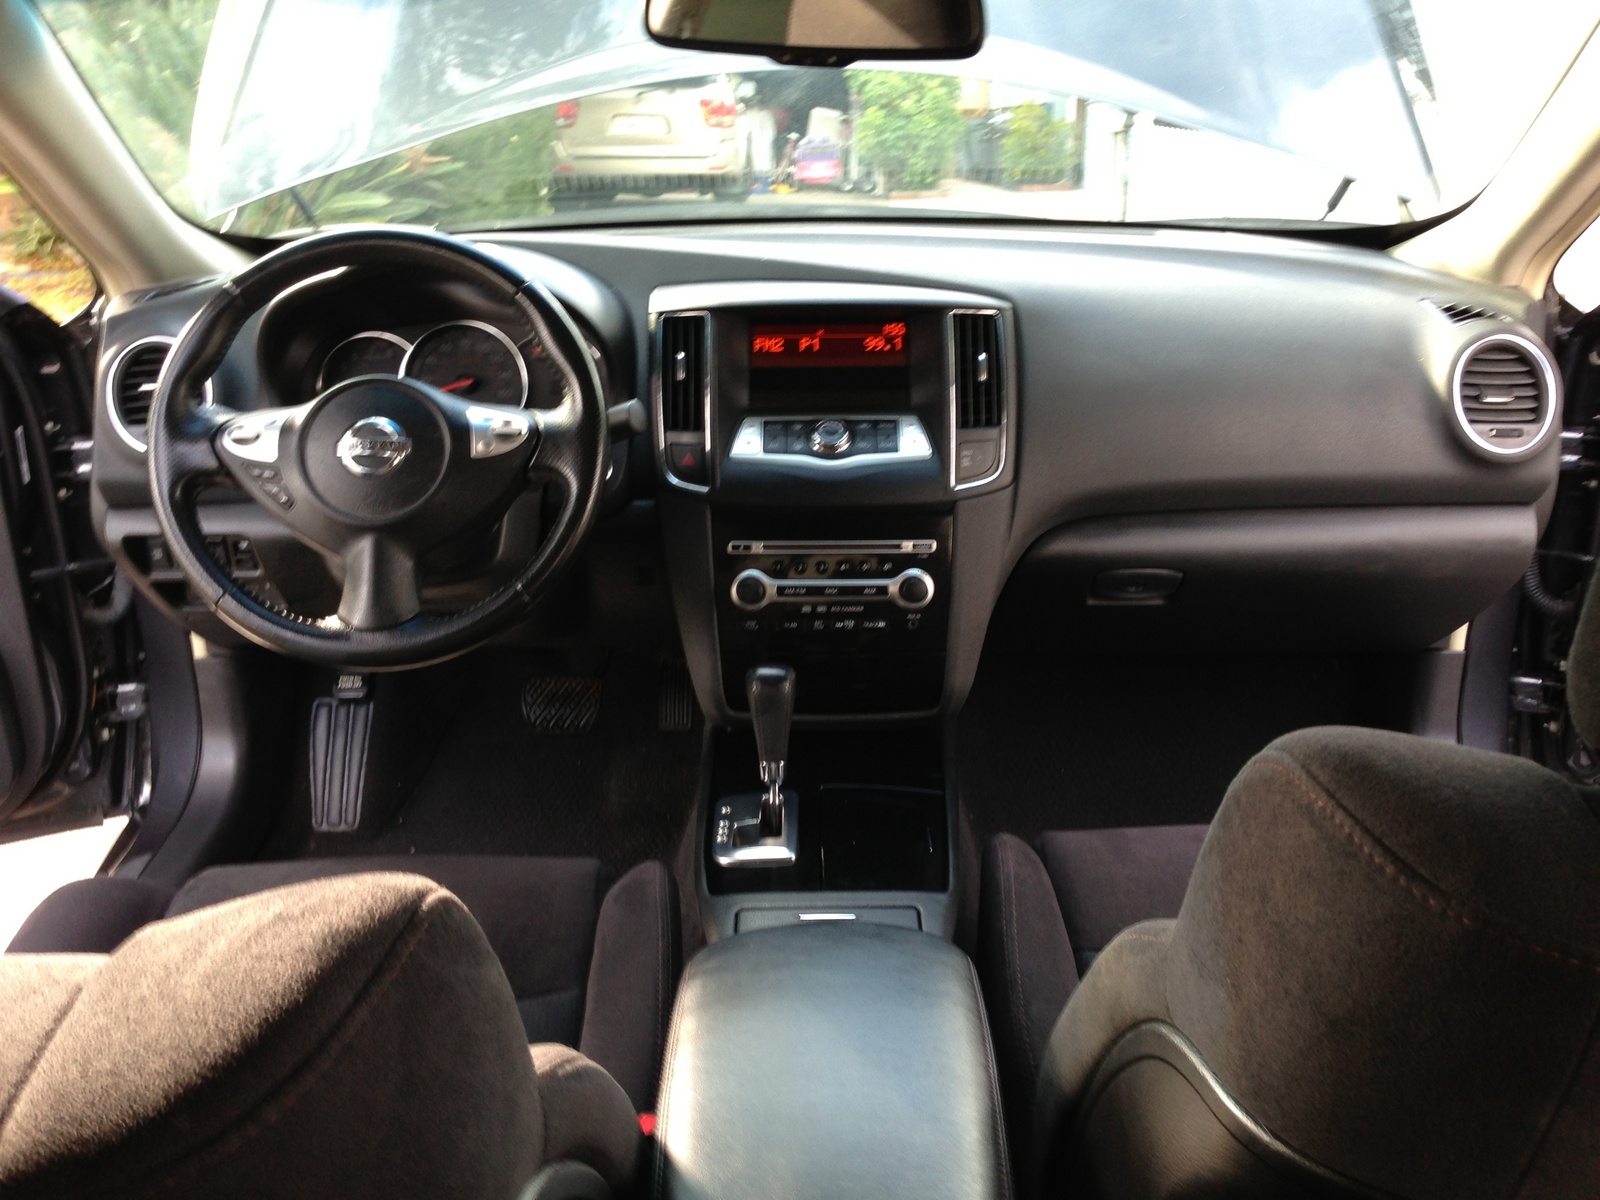 2010 Nissan maxima interior dimensions #1